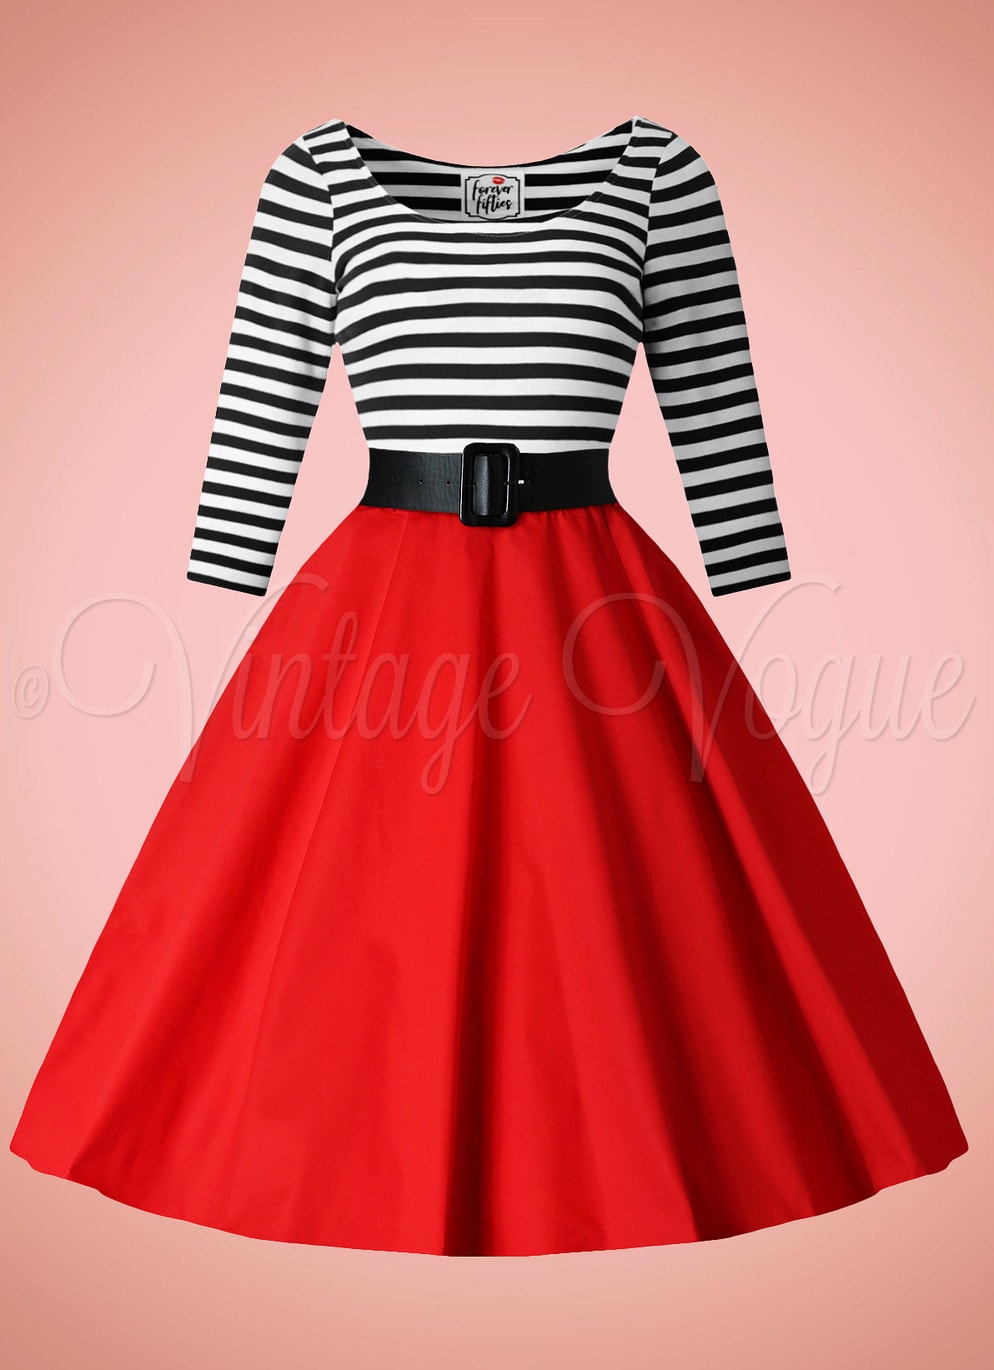 Forever Fifties 50's Retro Rockabilly Swing Kleid Alice Stripes Dress in Rot Schwarz Weiß 50er Jahre Petticoat Damenkleid Swing Jive Lindy Hop gestreift